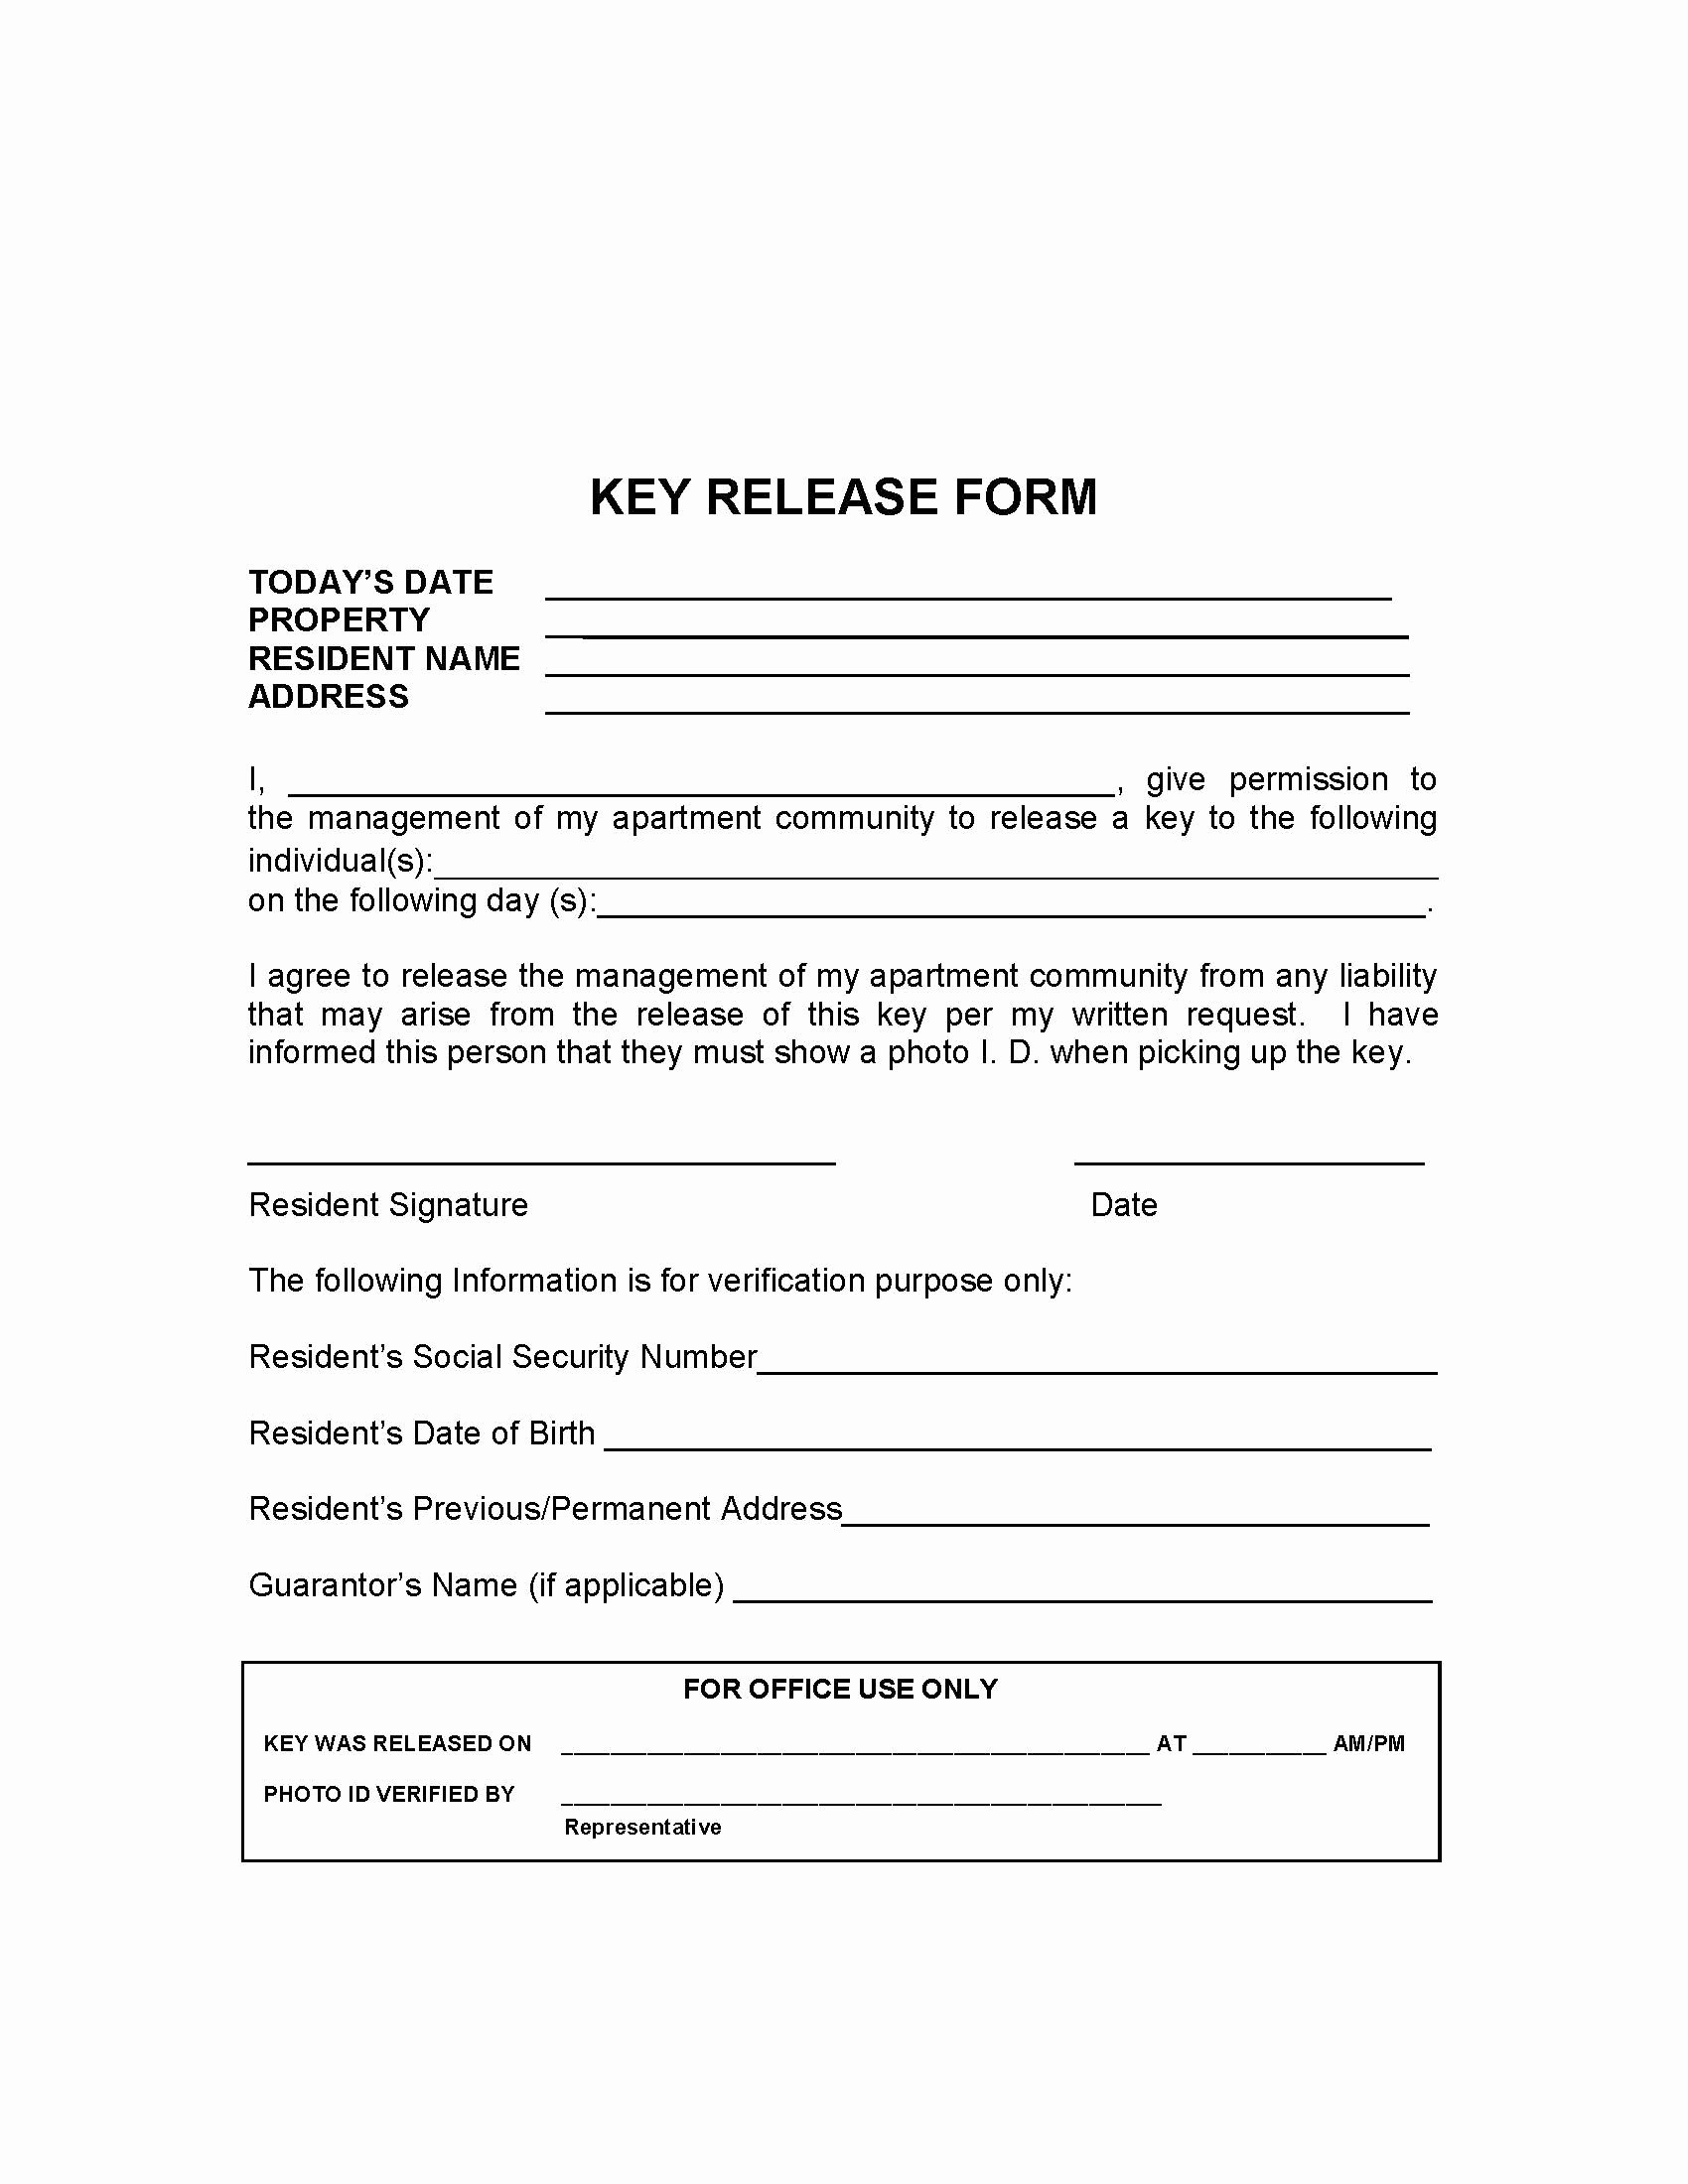 Employee Key Holder Agreement Template Inspirational Key Release form Release forms Release forms